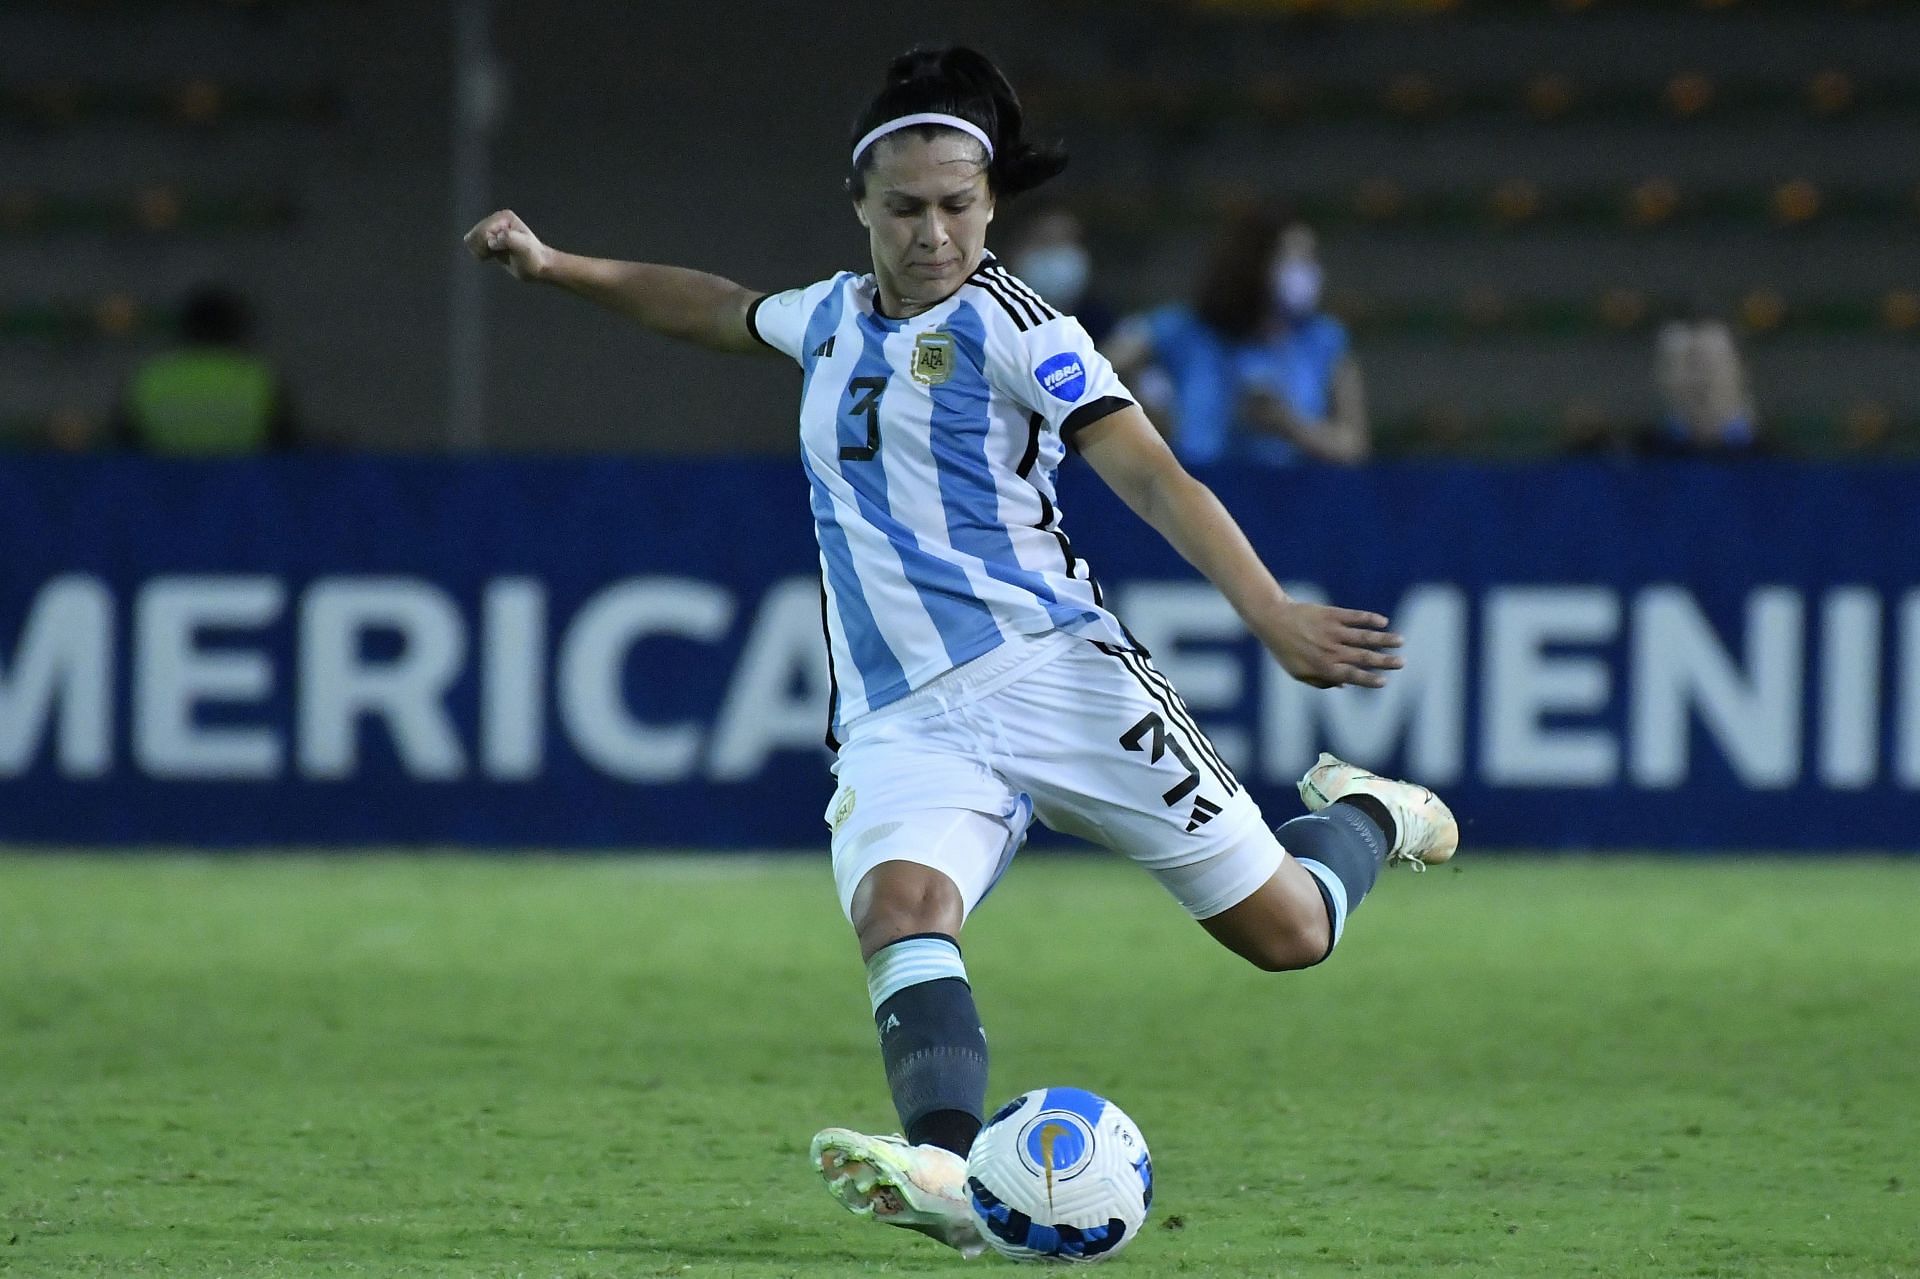 Argentina Women will face Peru Women in their upcoming Copa America Feminina fixture on Tuesday